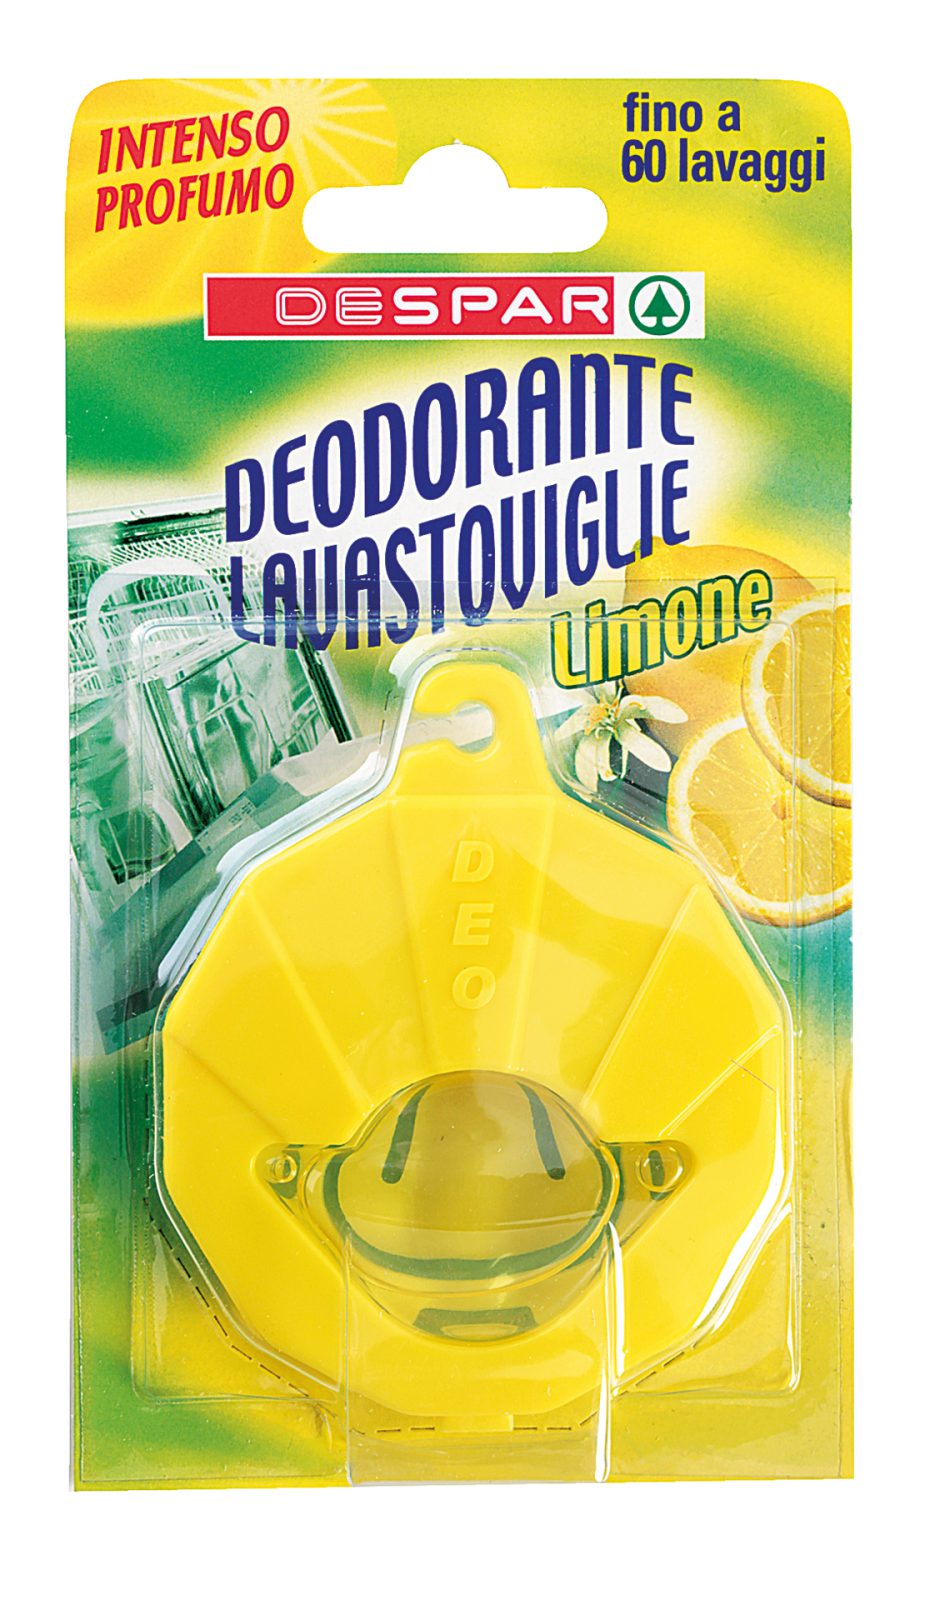 Deodorante Lavastoviglie Limone - Despar Tribù